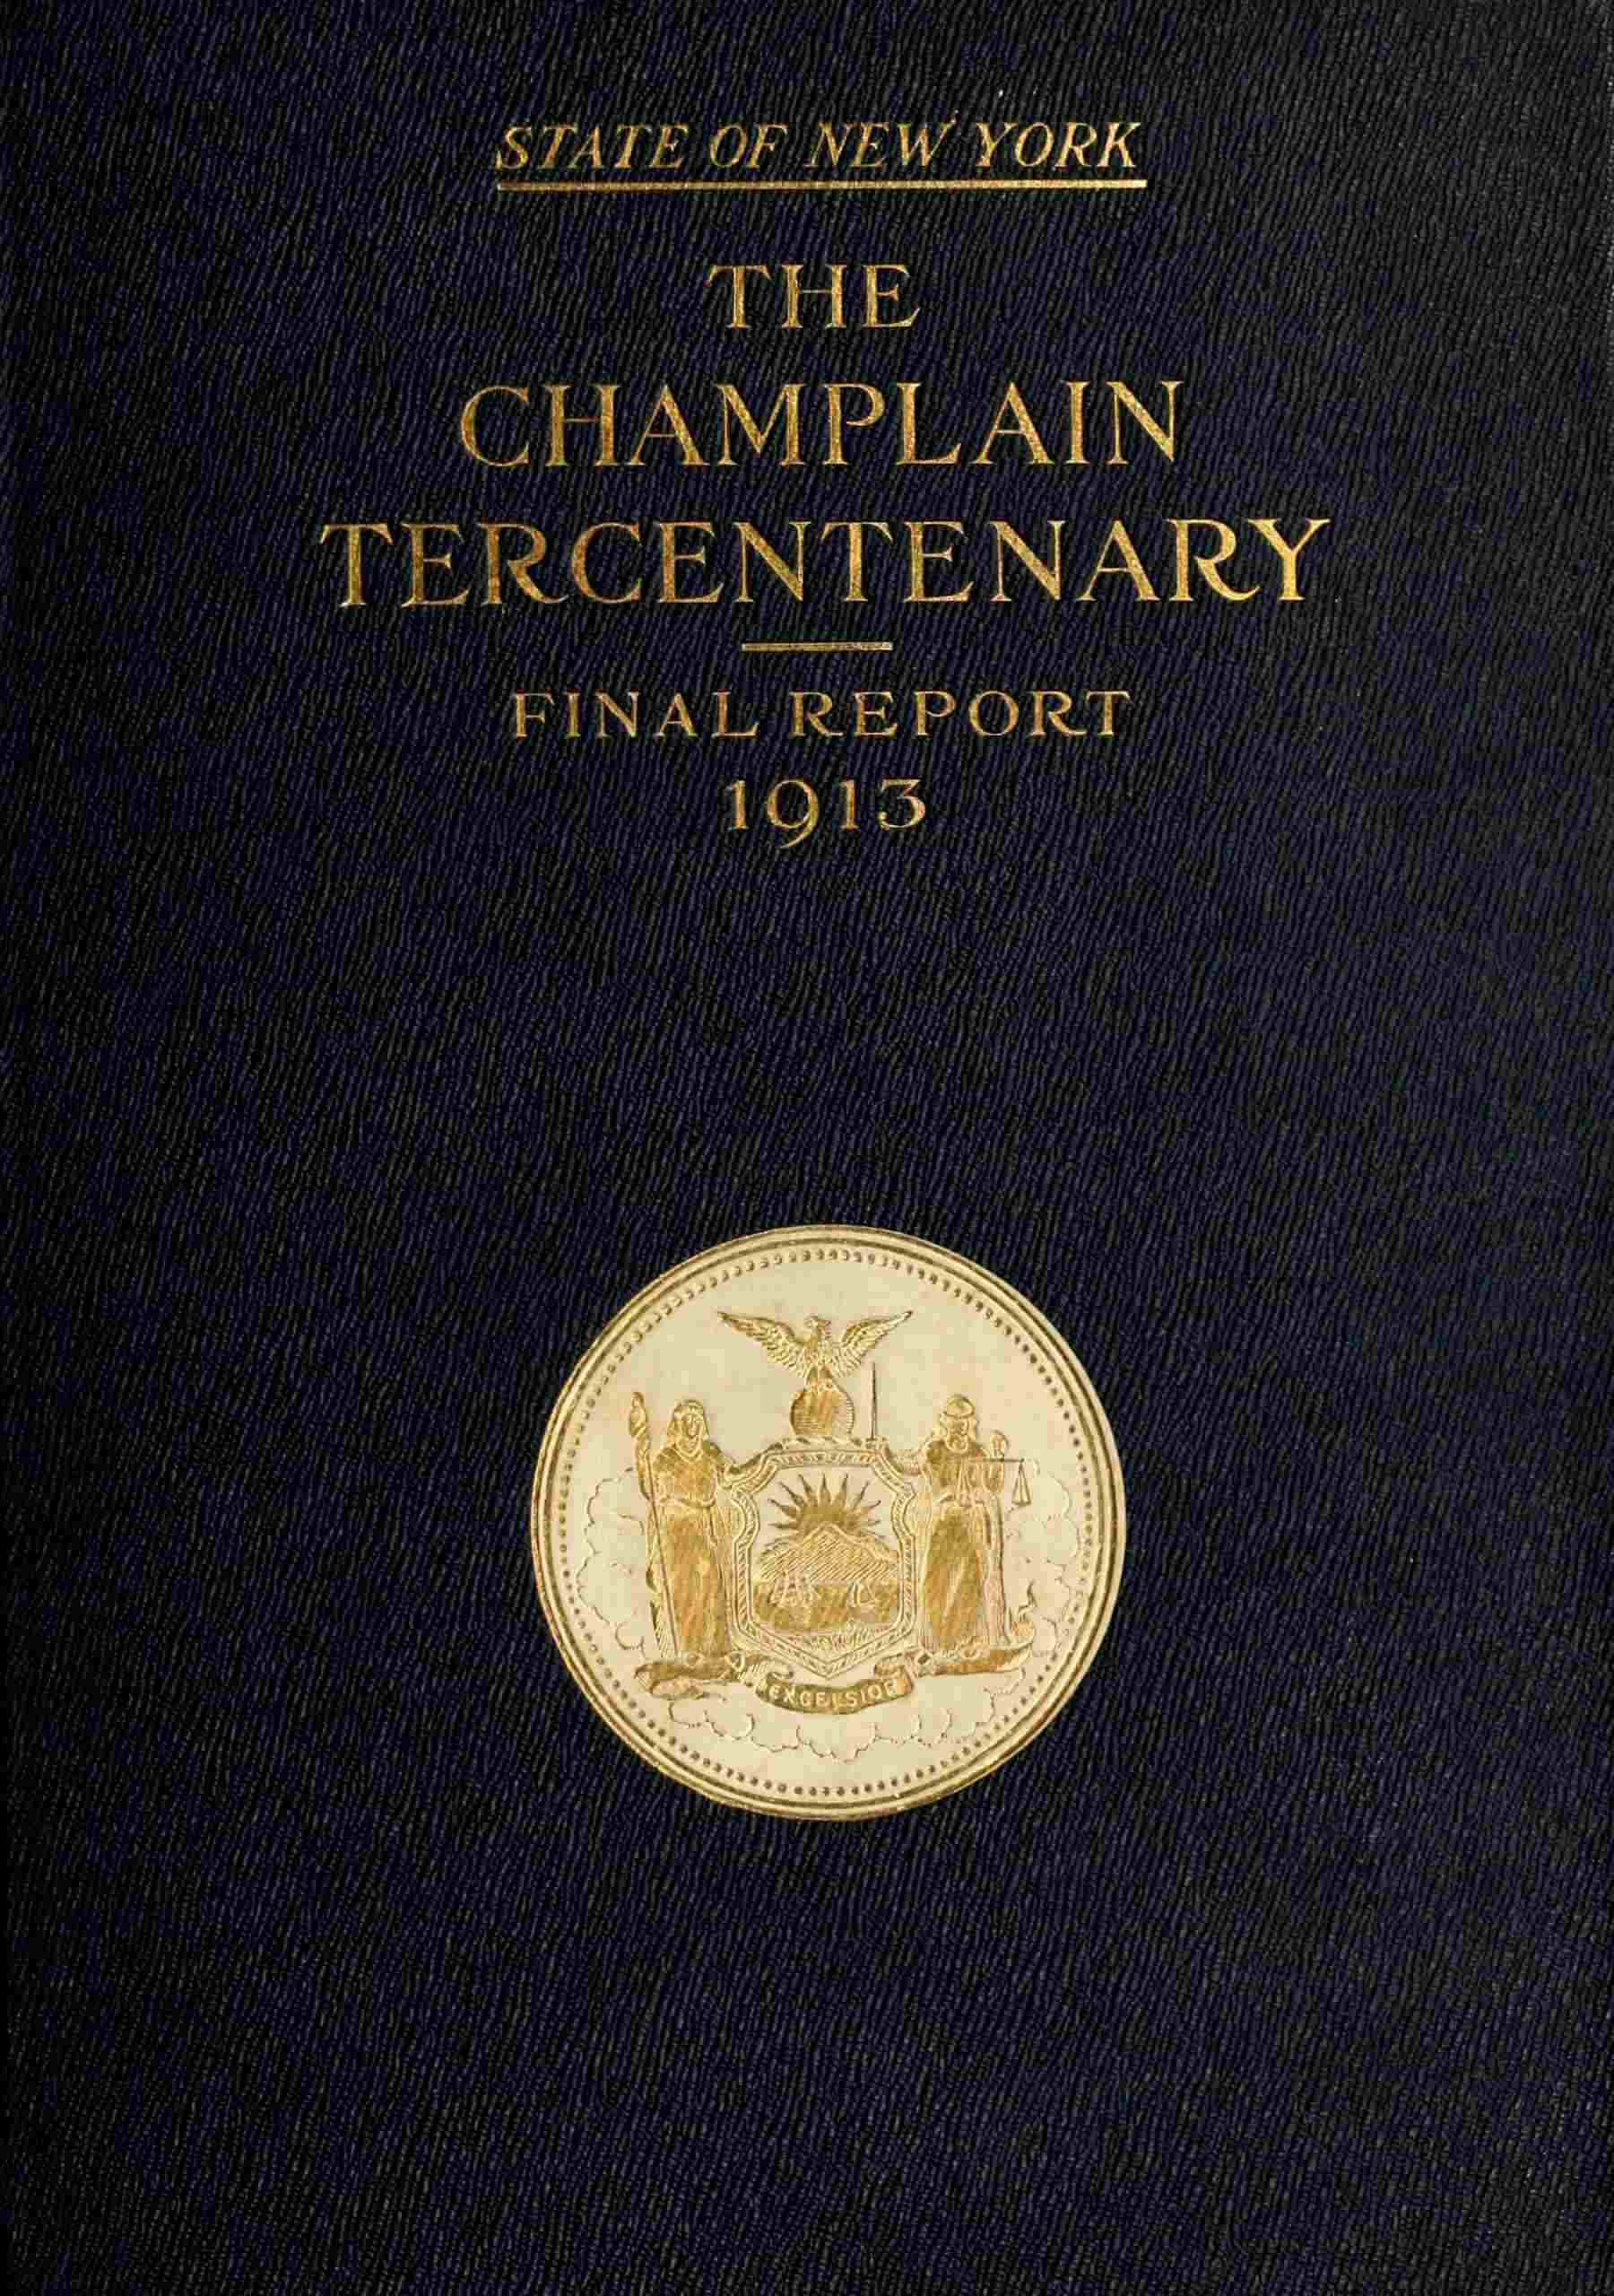 The Champlain tercentenary